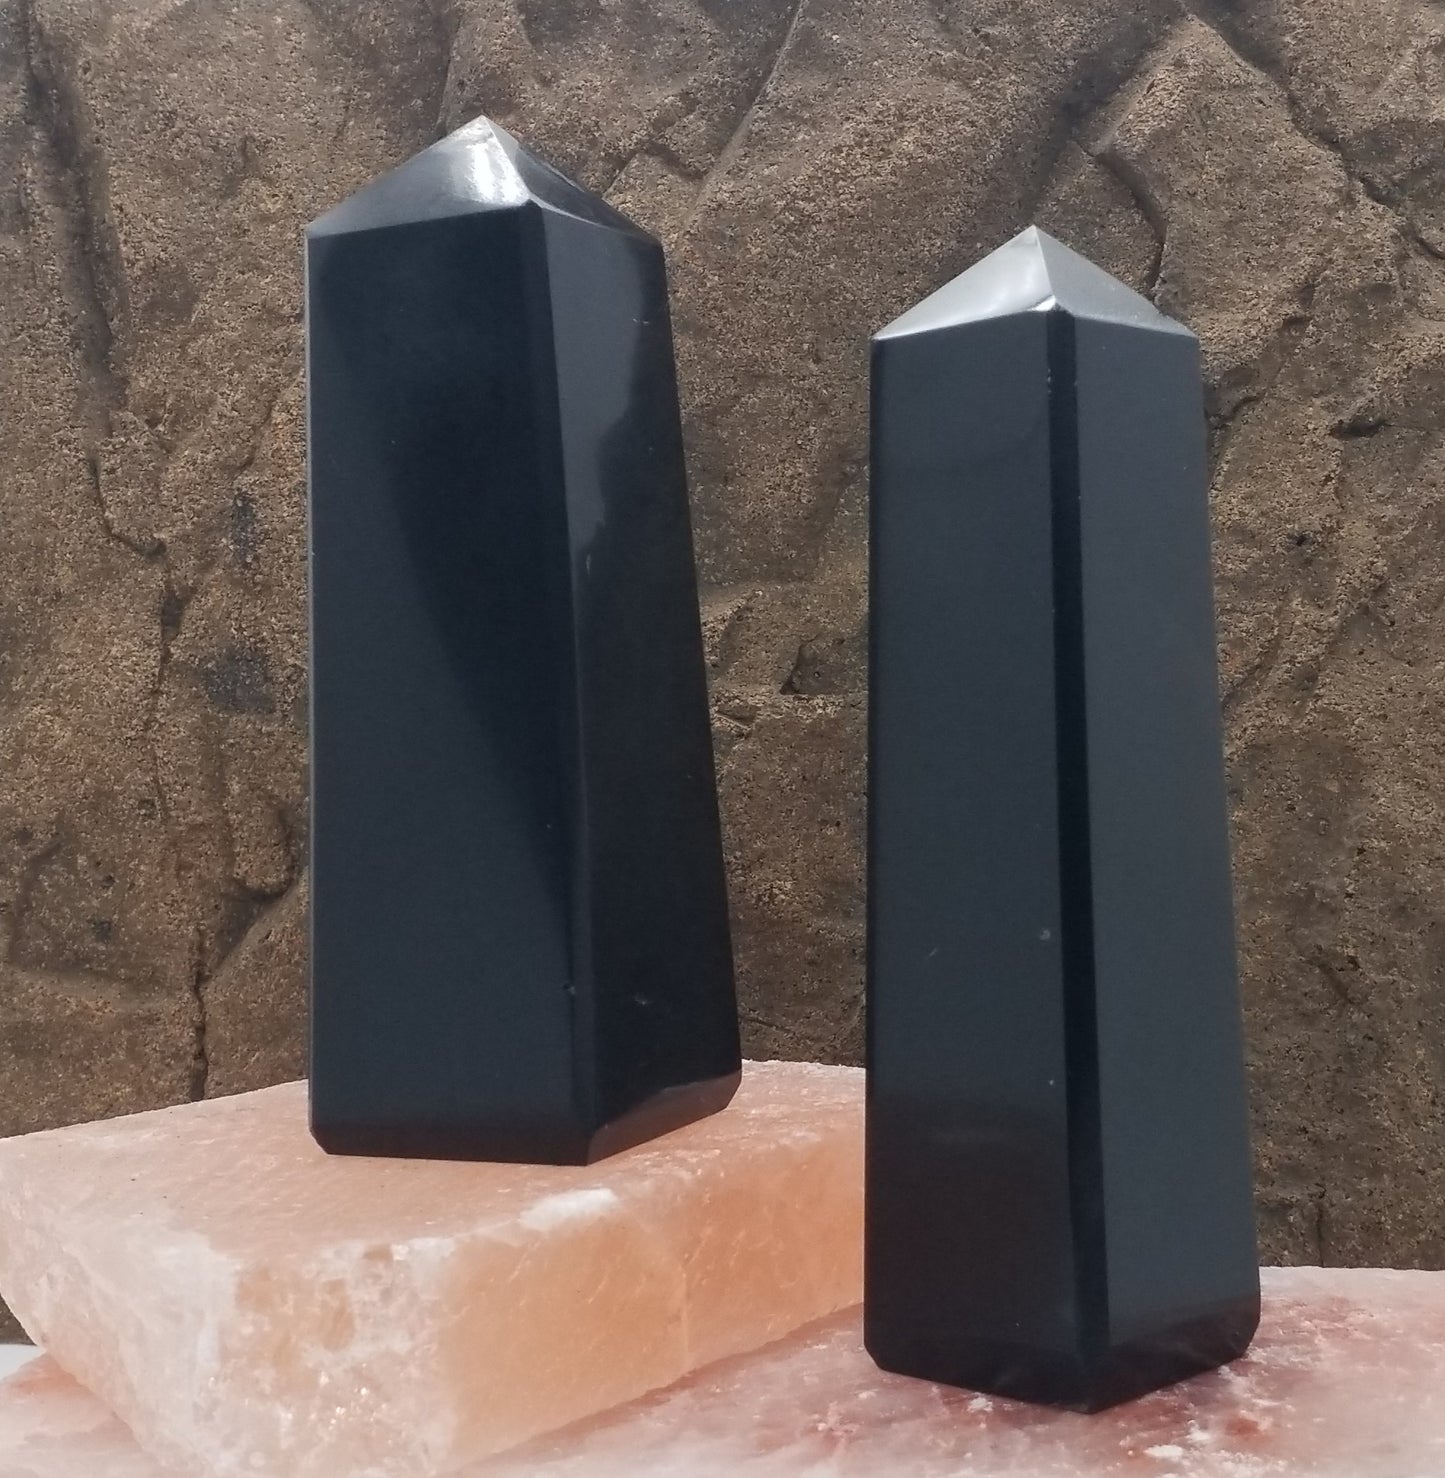 Black Obsidian Obelisk